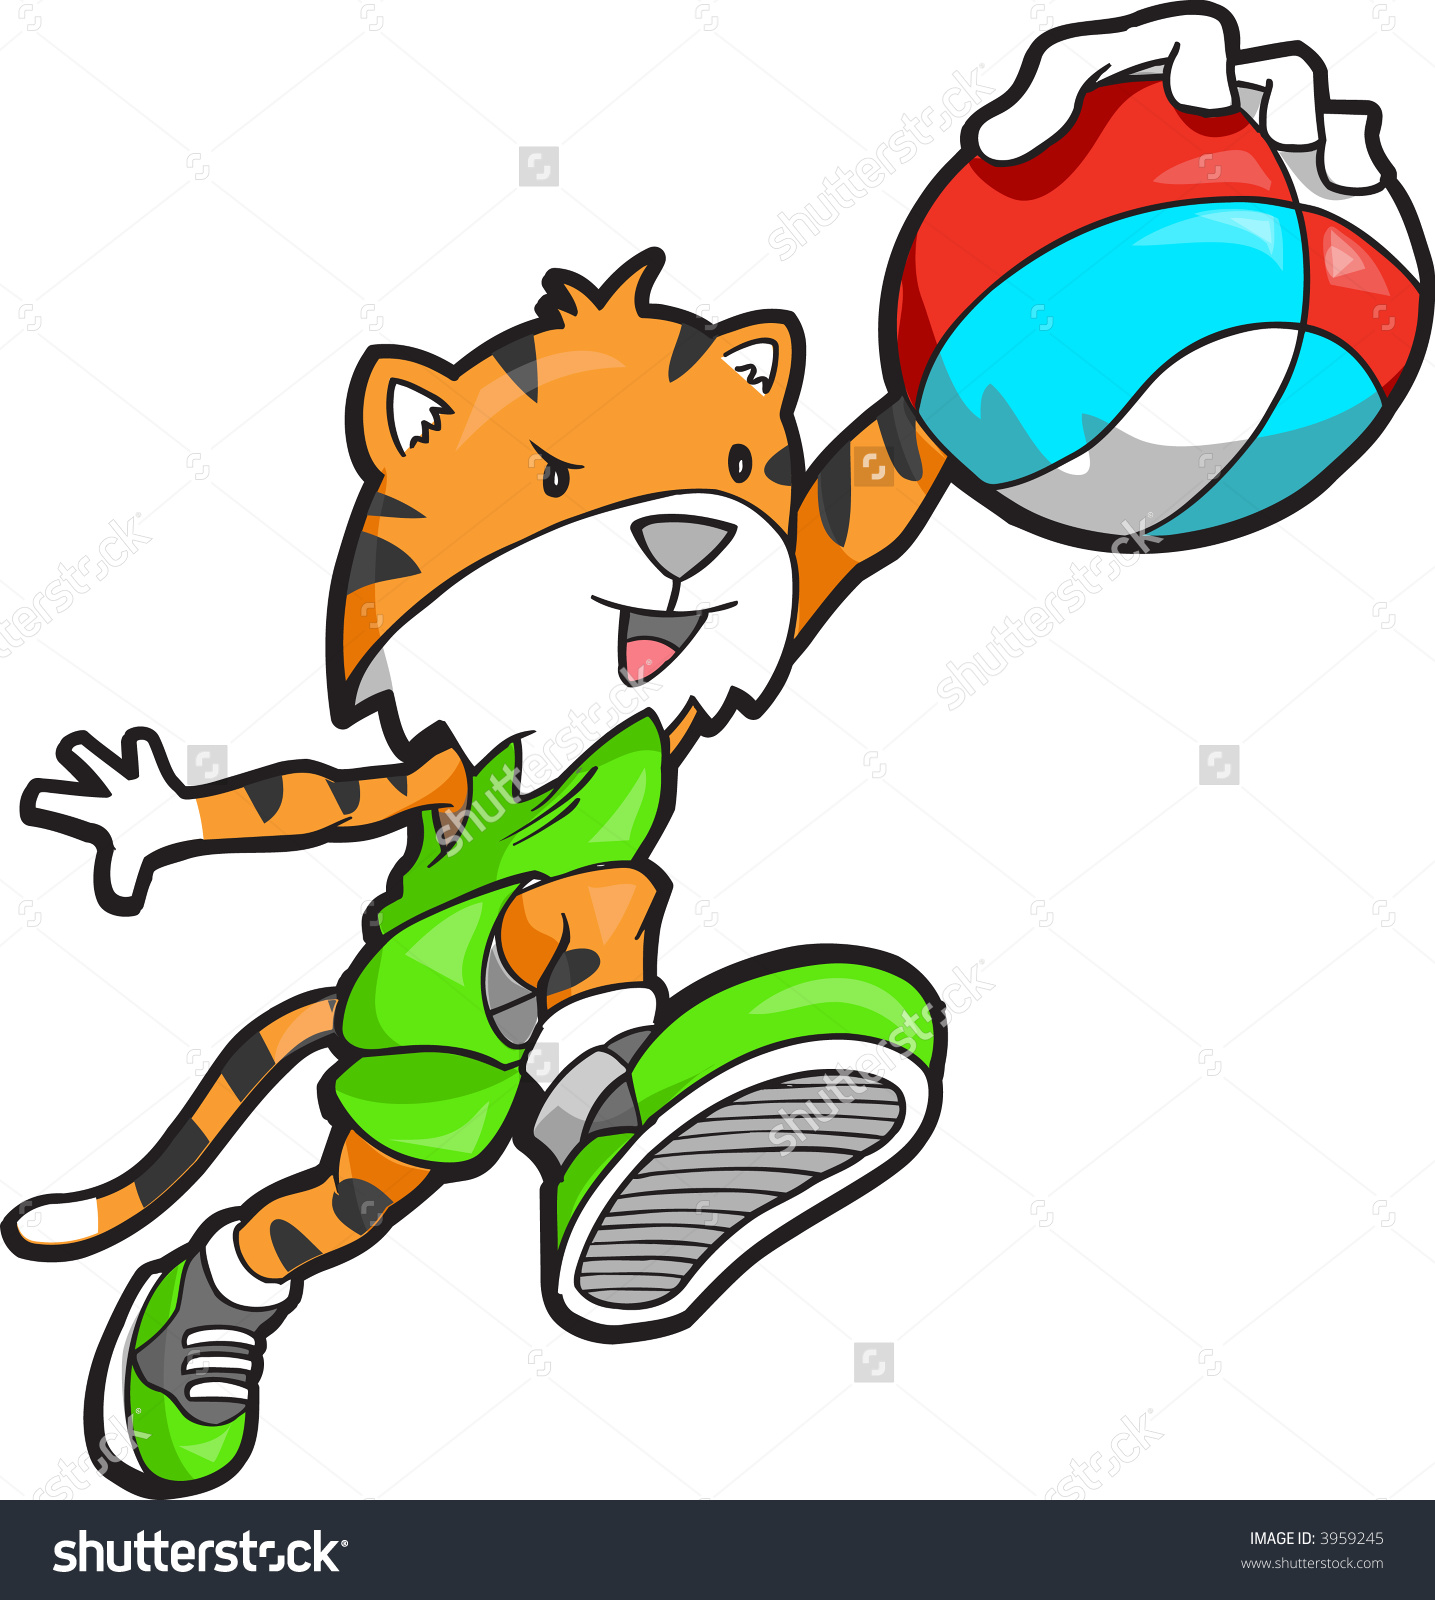 Tiger Basketball Player Vector Illustration.